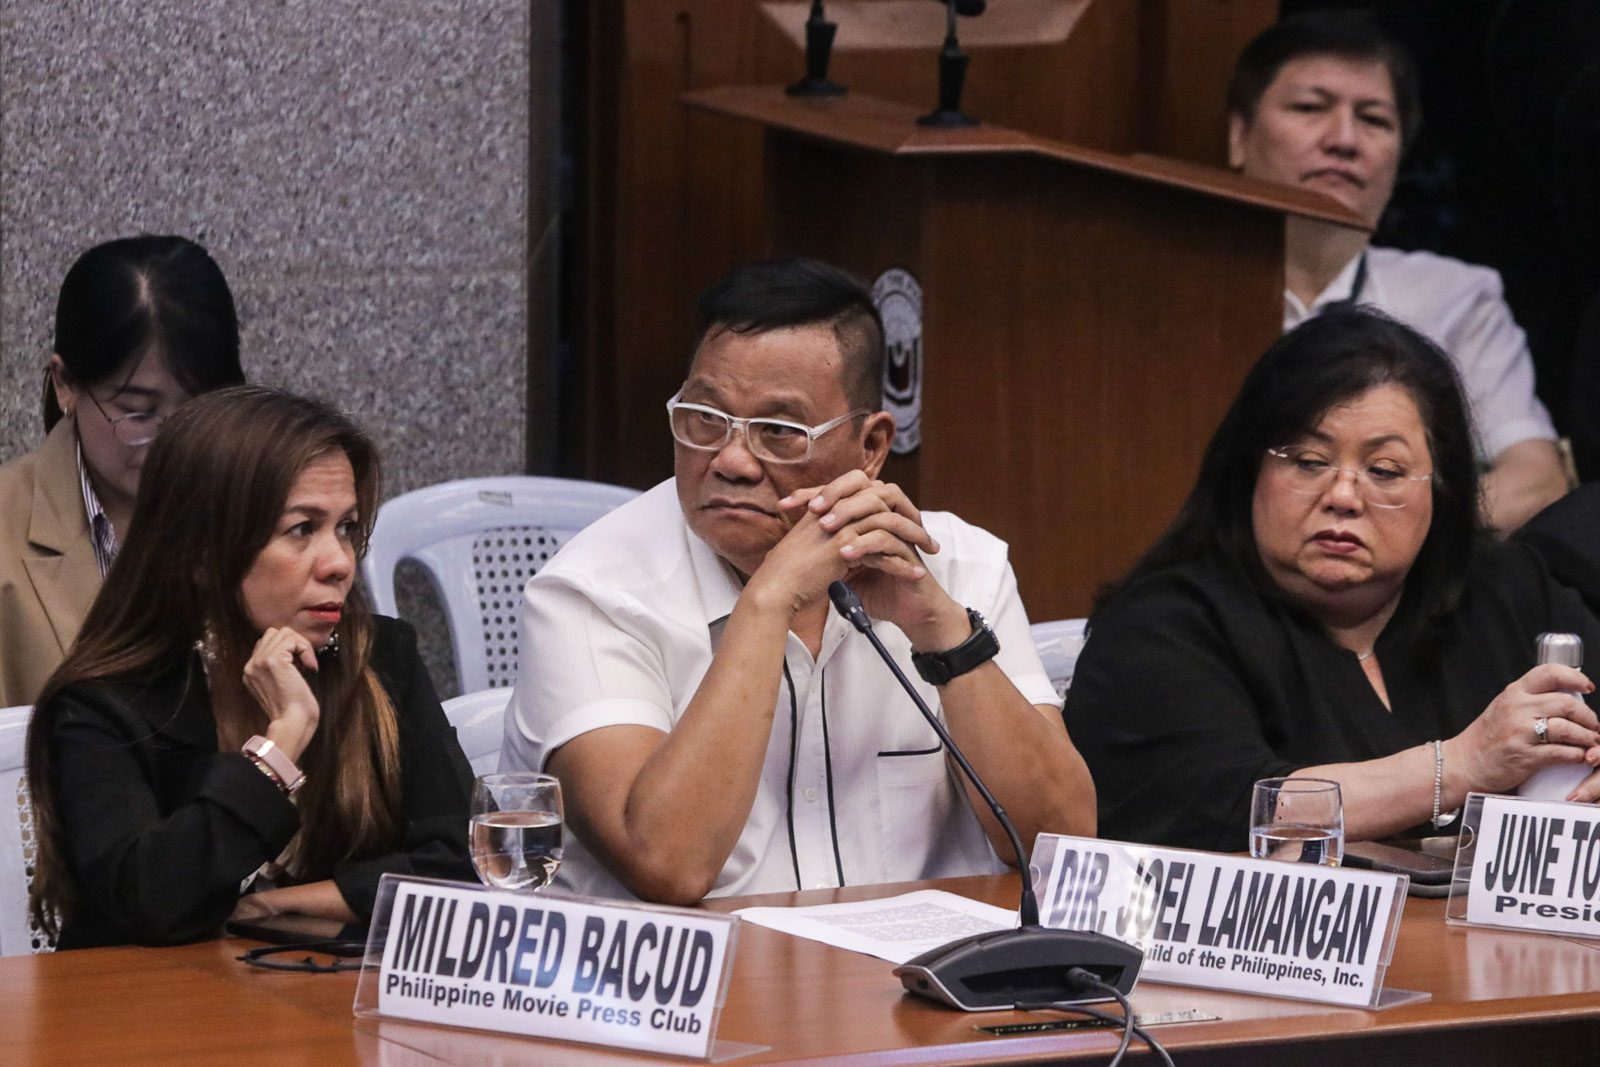 Joel Lamangan on ABS-CBN shutdown threat: Who will tell the story of the Filipino?